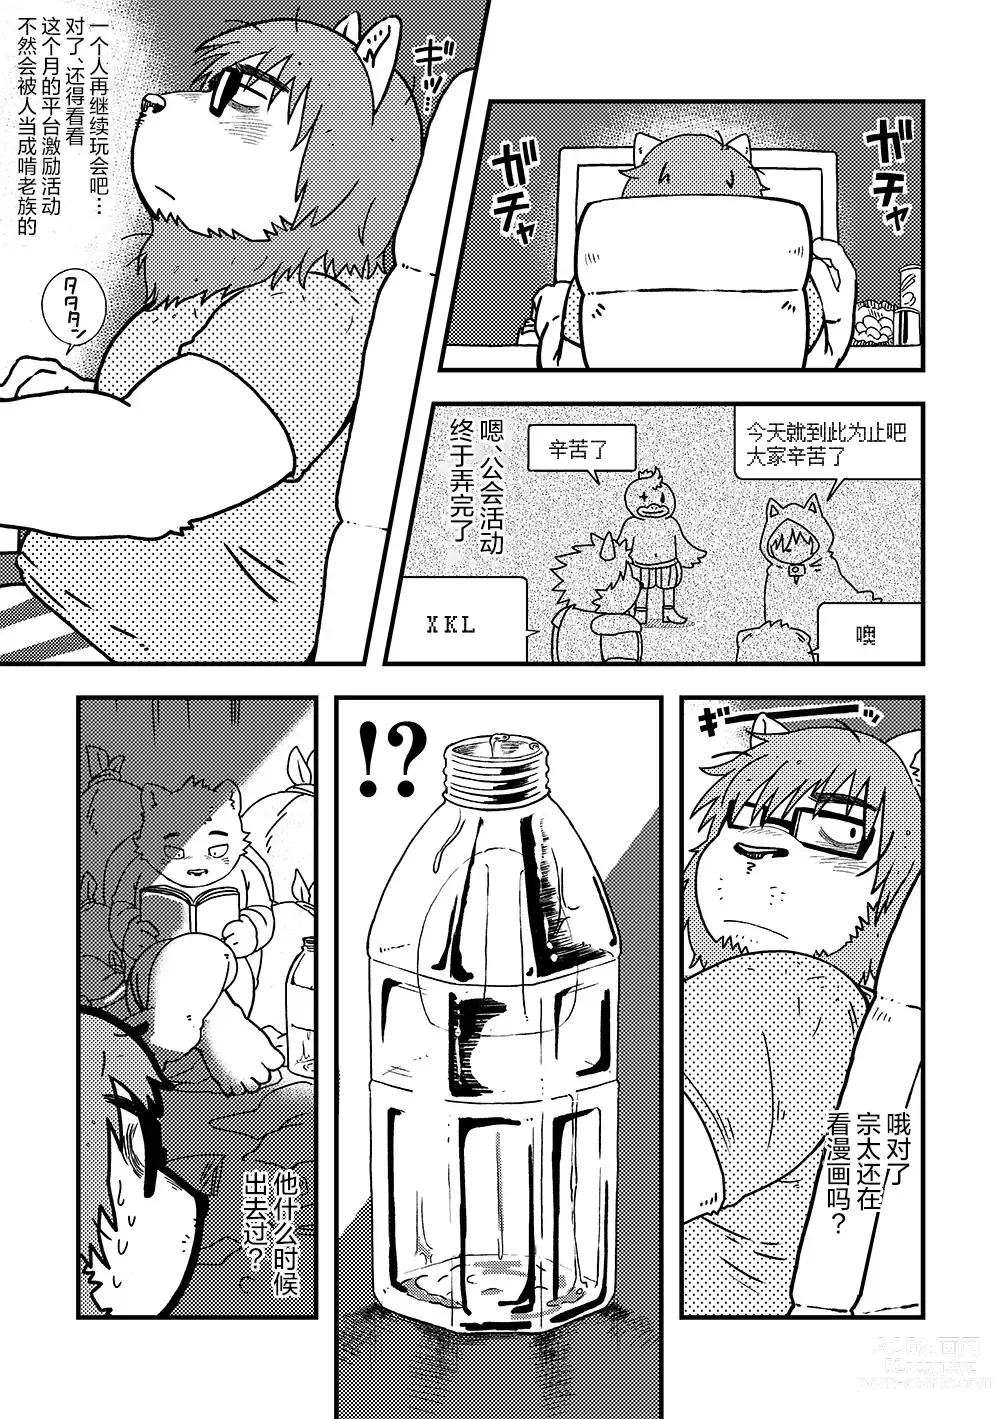 Page 7 of doujinshi 塑料瓶兄弟